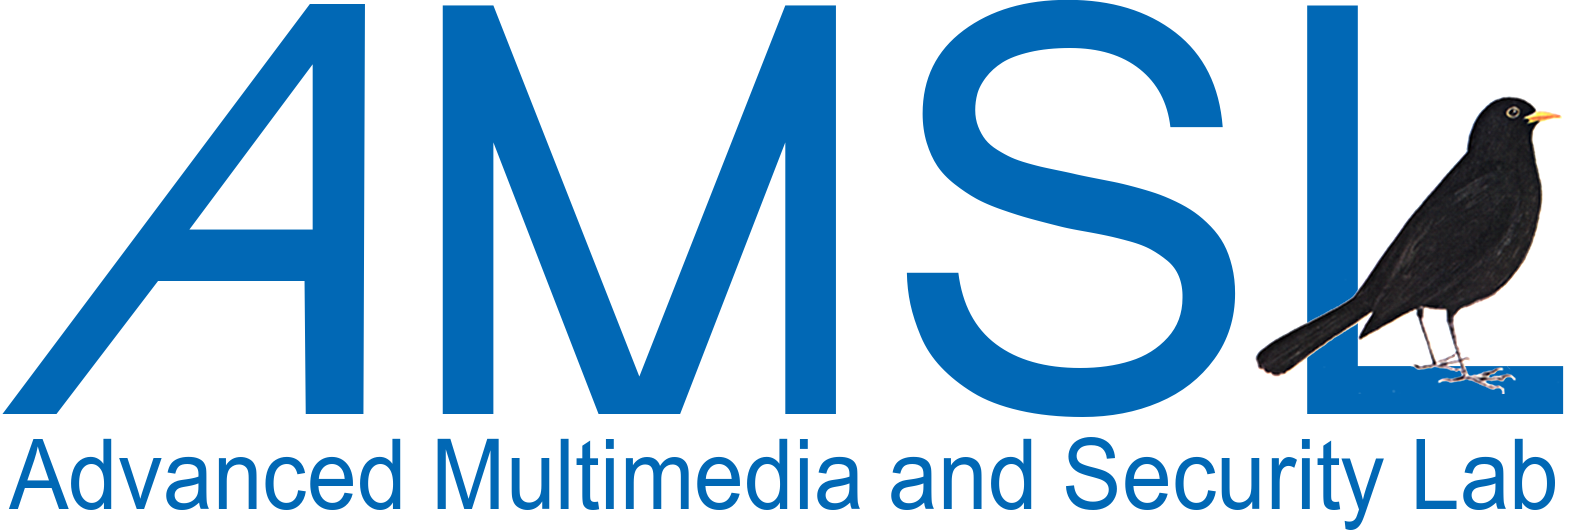 AMSL logo